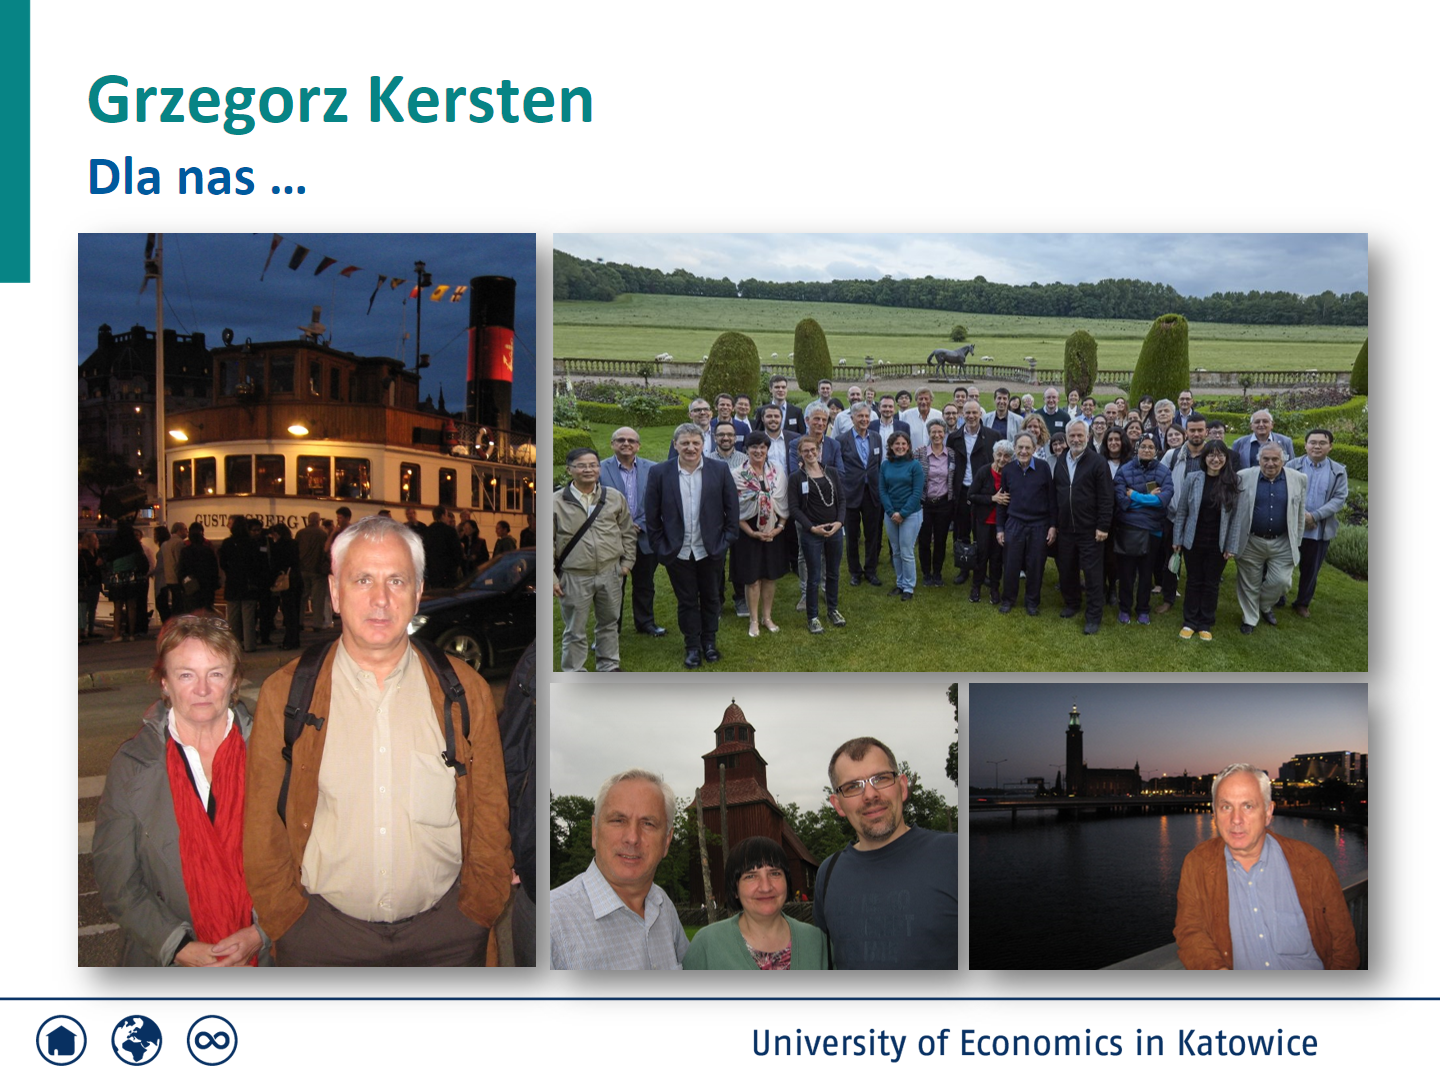 Gregory Kersten - negocjacje elektroniczne